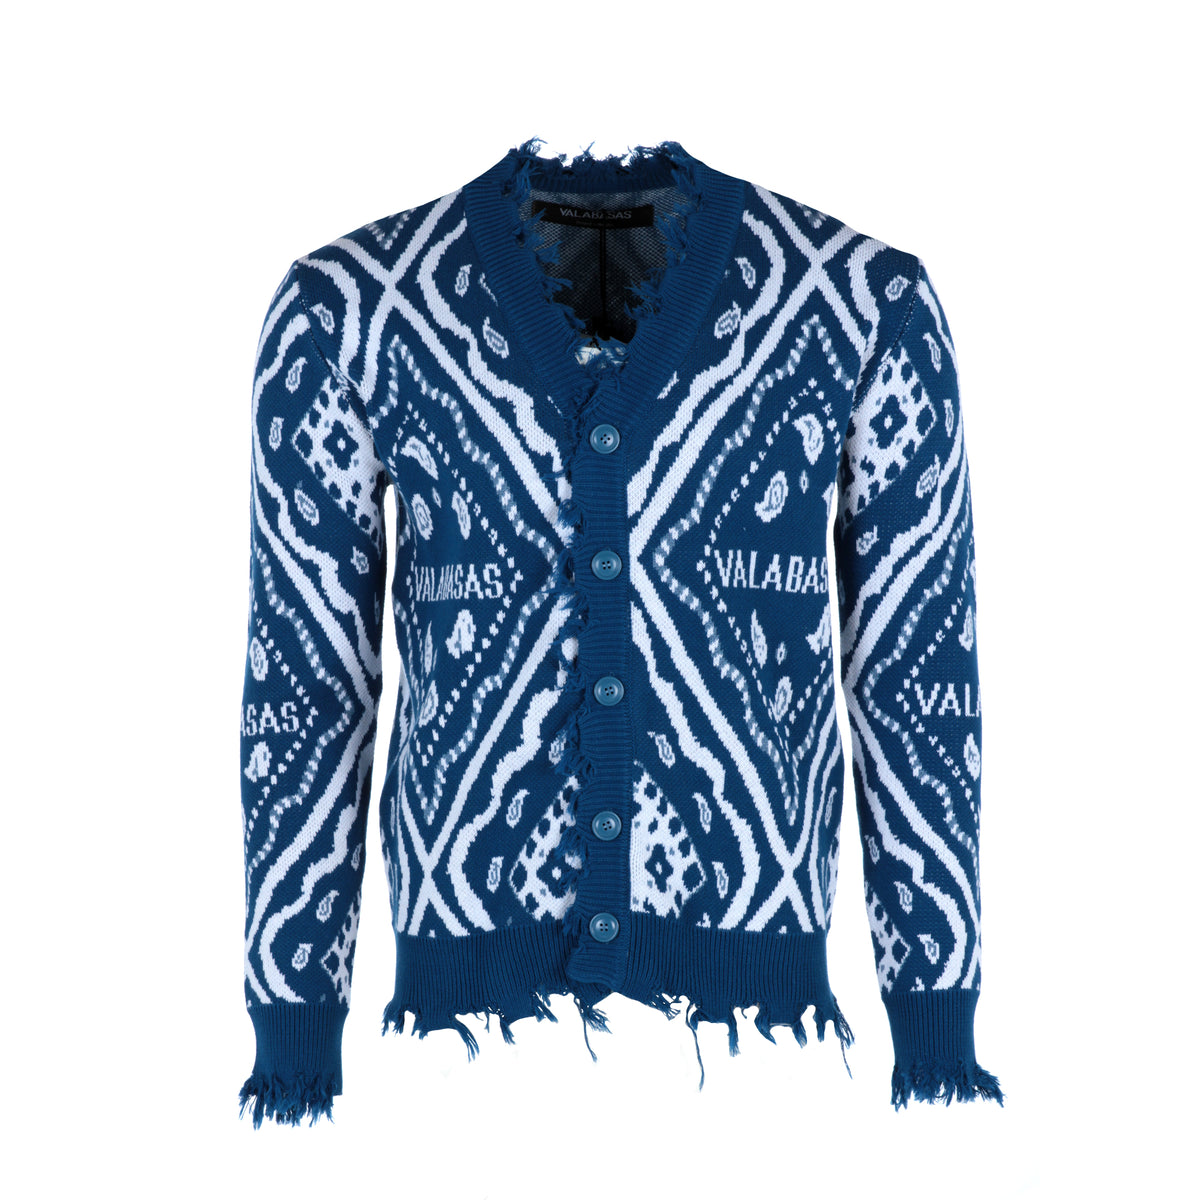 Valabases The Pledge Men's Cardigan Sweater Blue